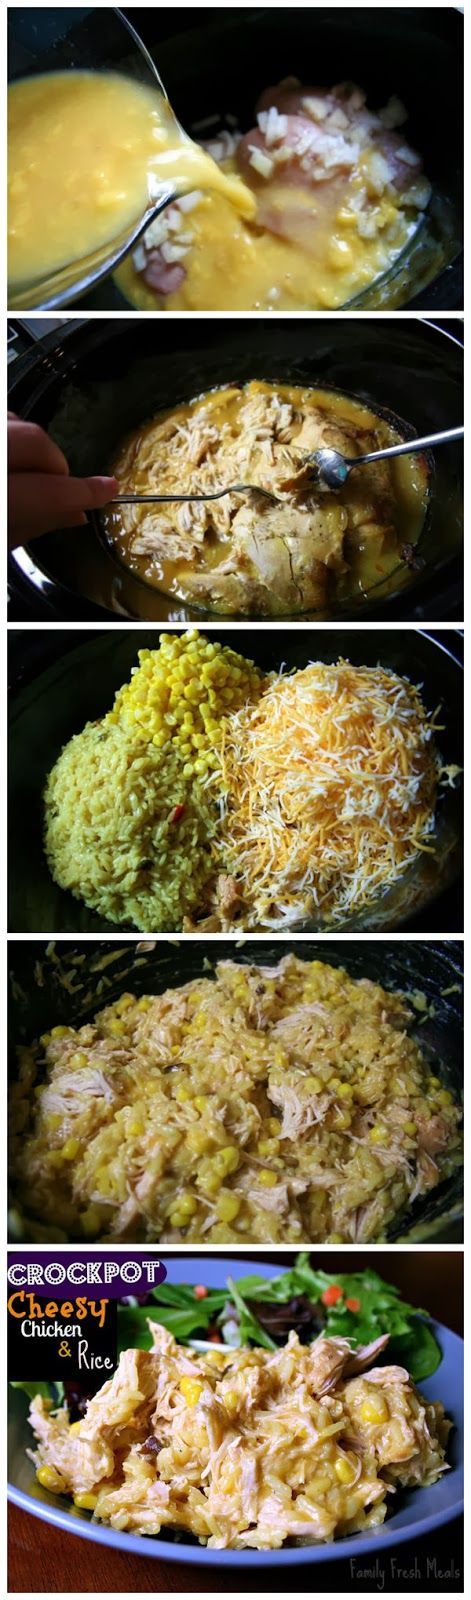 crockpot cheesy chicken rice